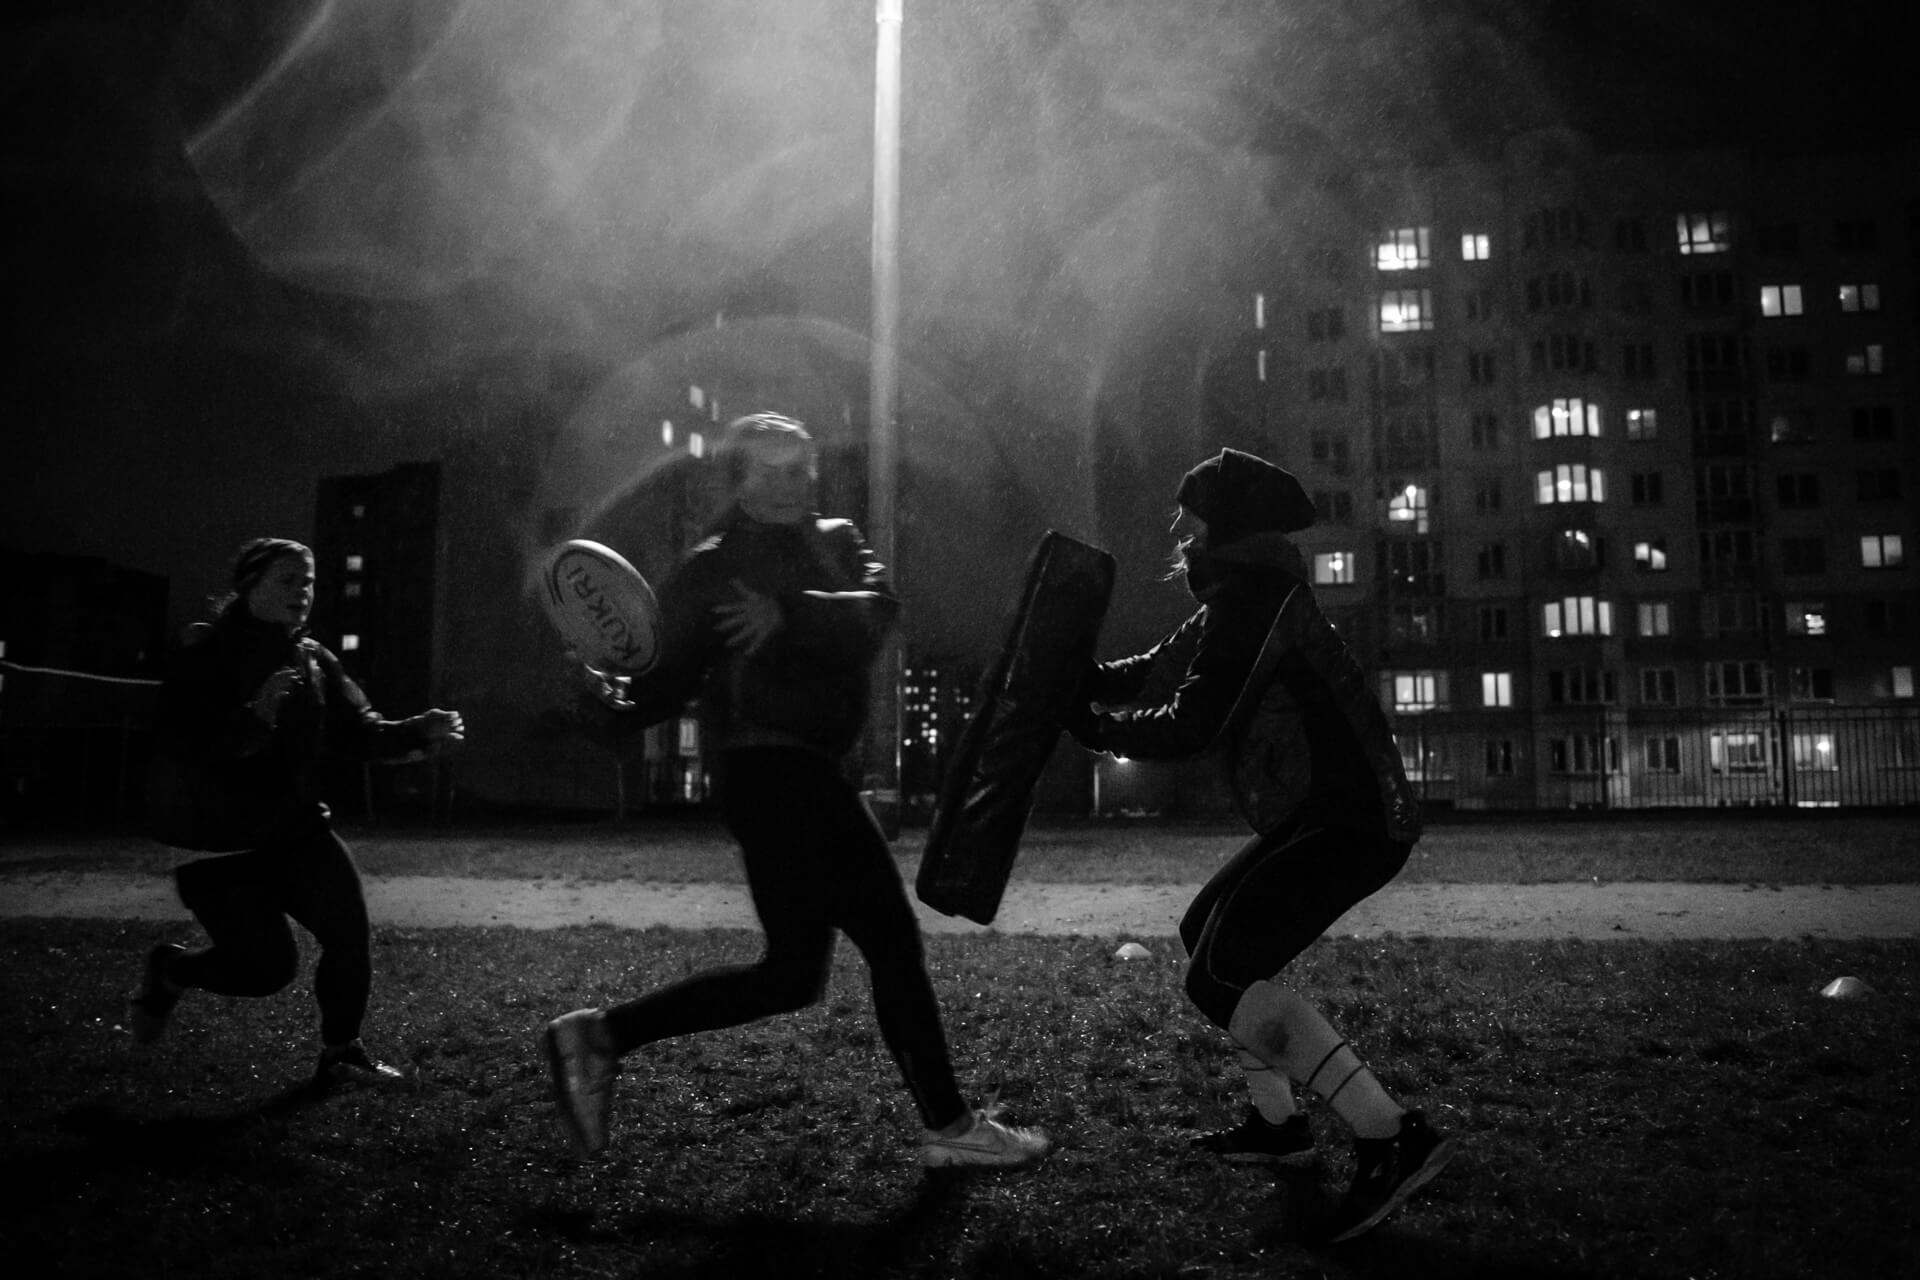 rugby players, photo by Uladz Hrydzin